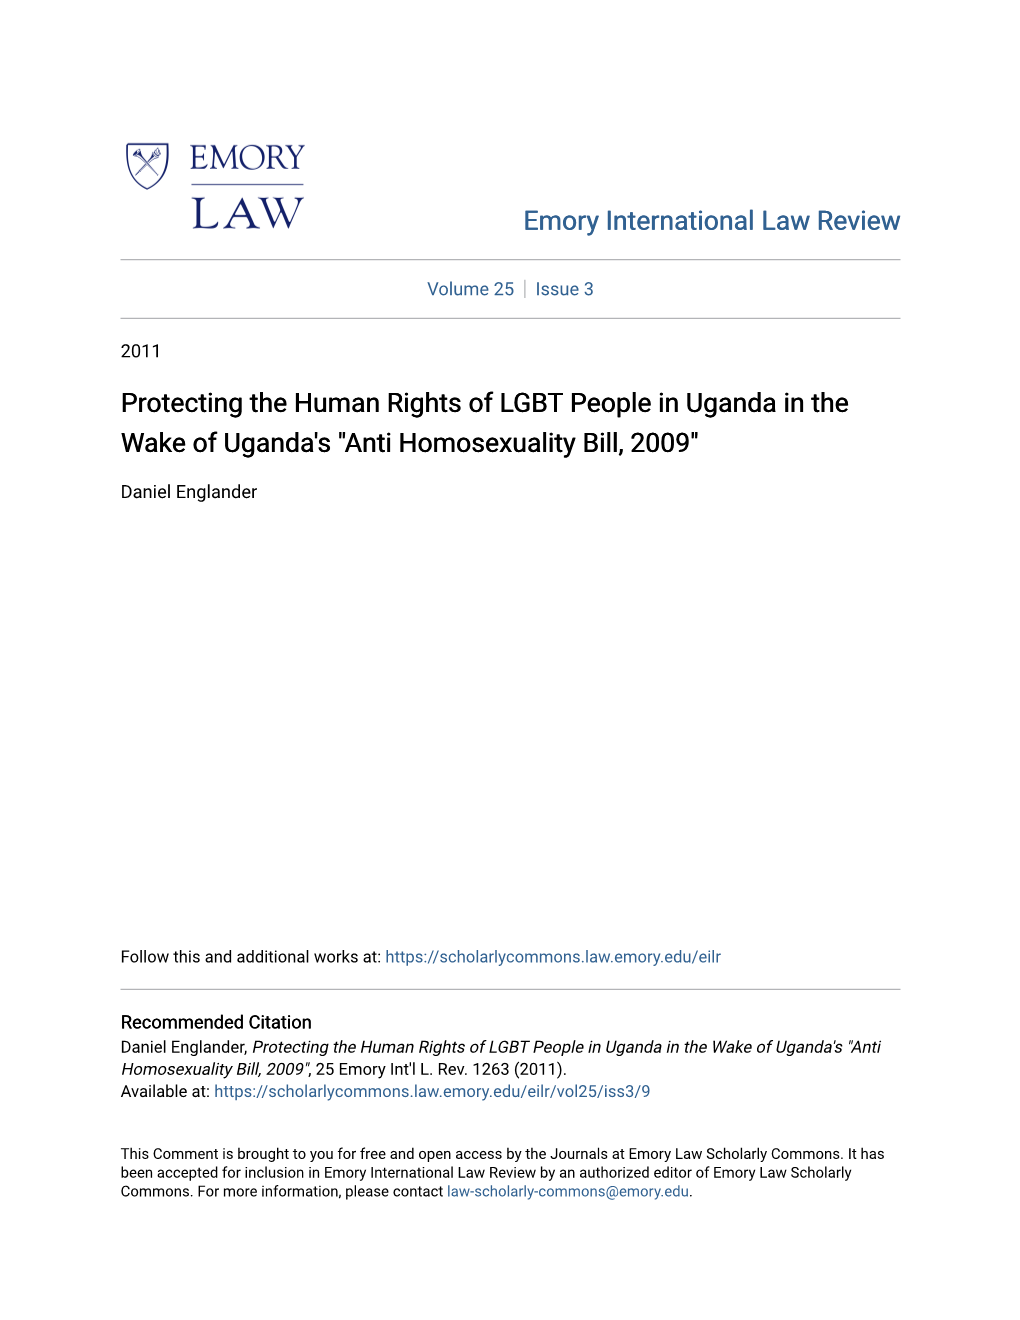 Anti Homosexuality Bill, 2009"